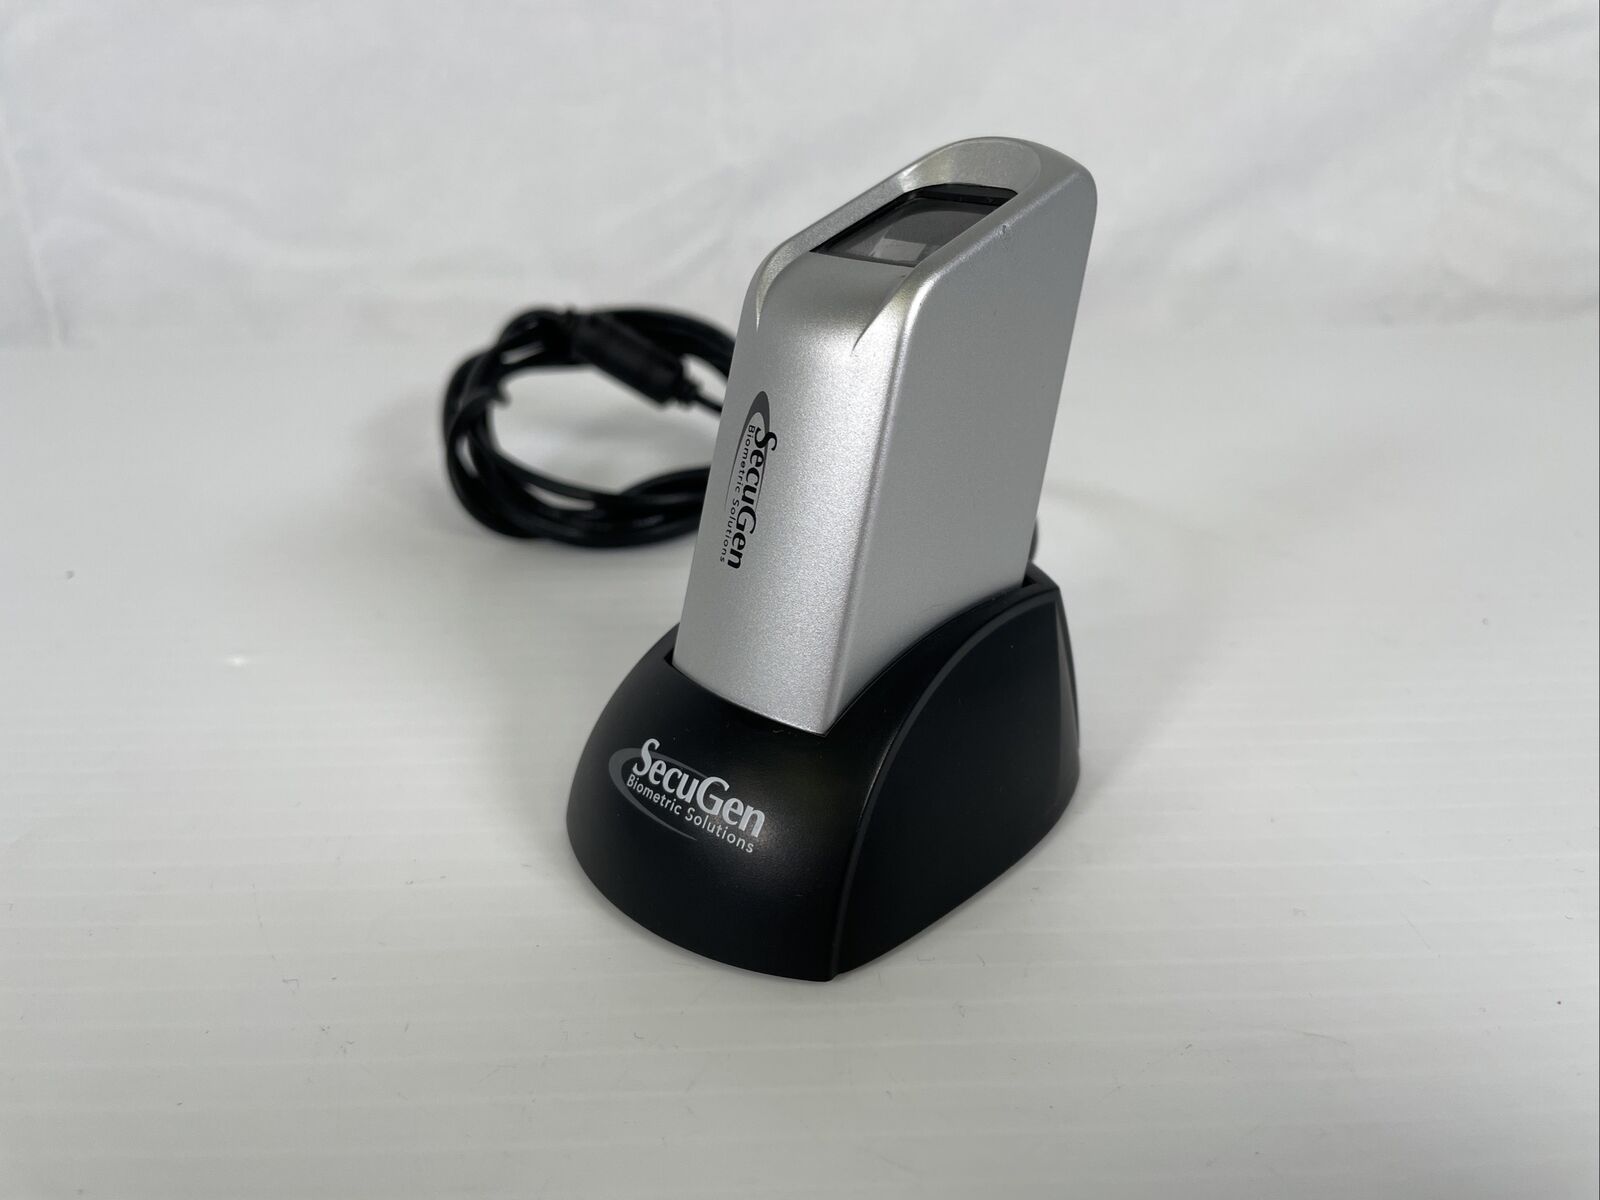 SecuGen  Biometrics Solutions Corporation Hamster HFDU02 Fingerprint Scanner